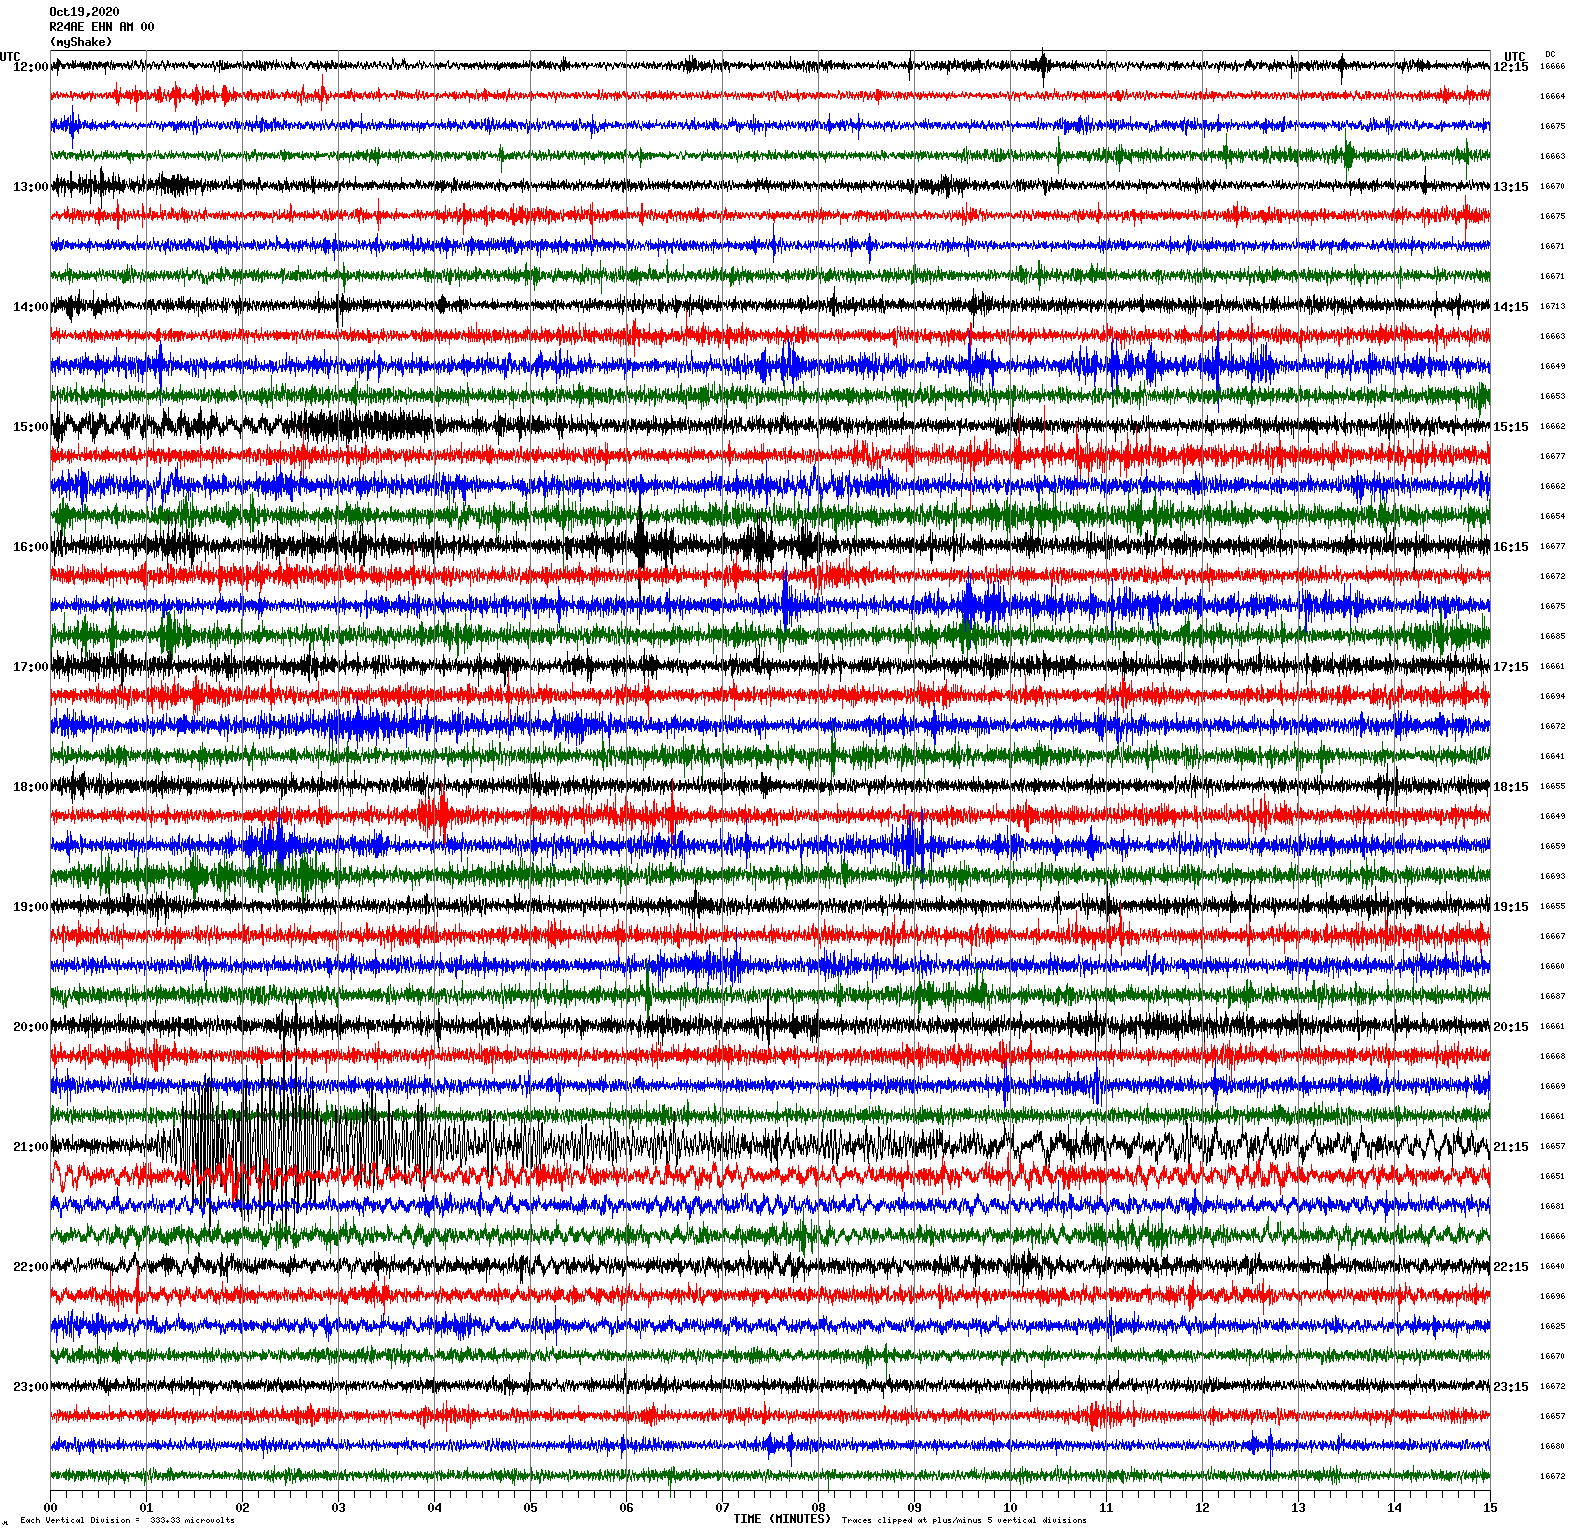 /seismic-data/R24AE/R24AE_EHN_AM_00.2020101912.gif